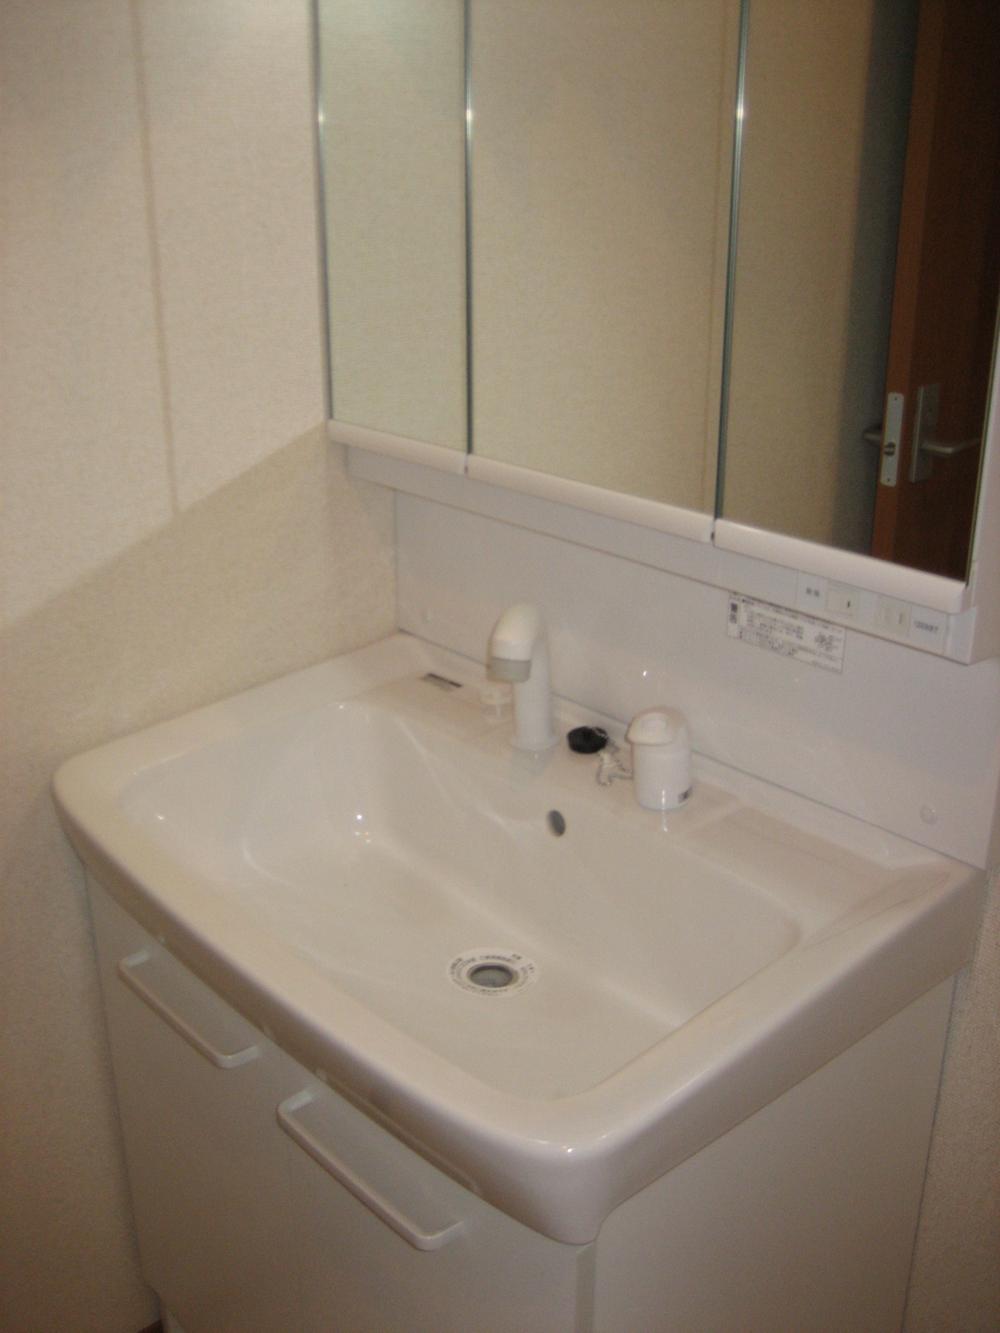 Wash basin, toilet. Easy-to-use wash basin